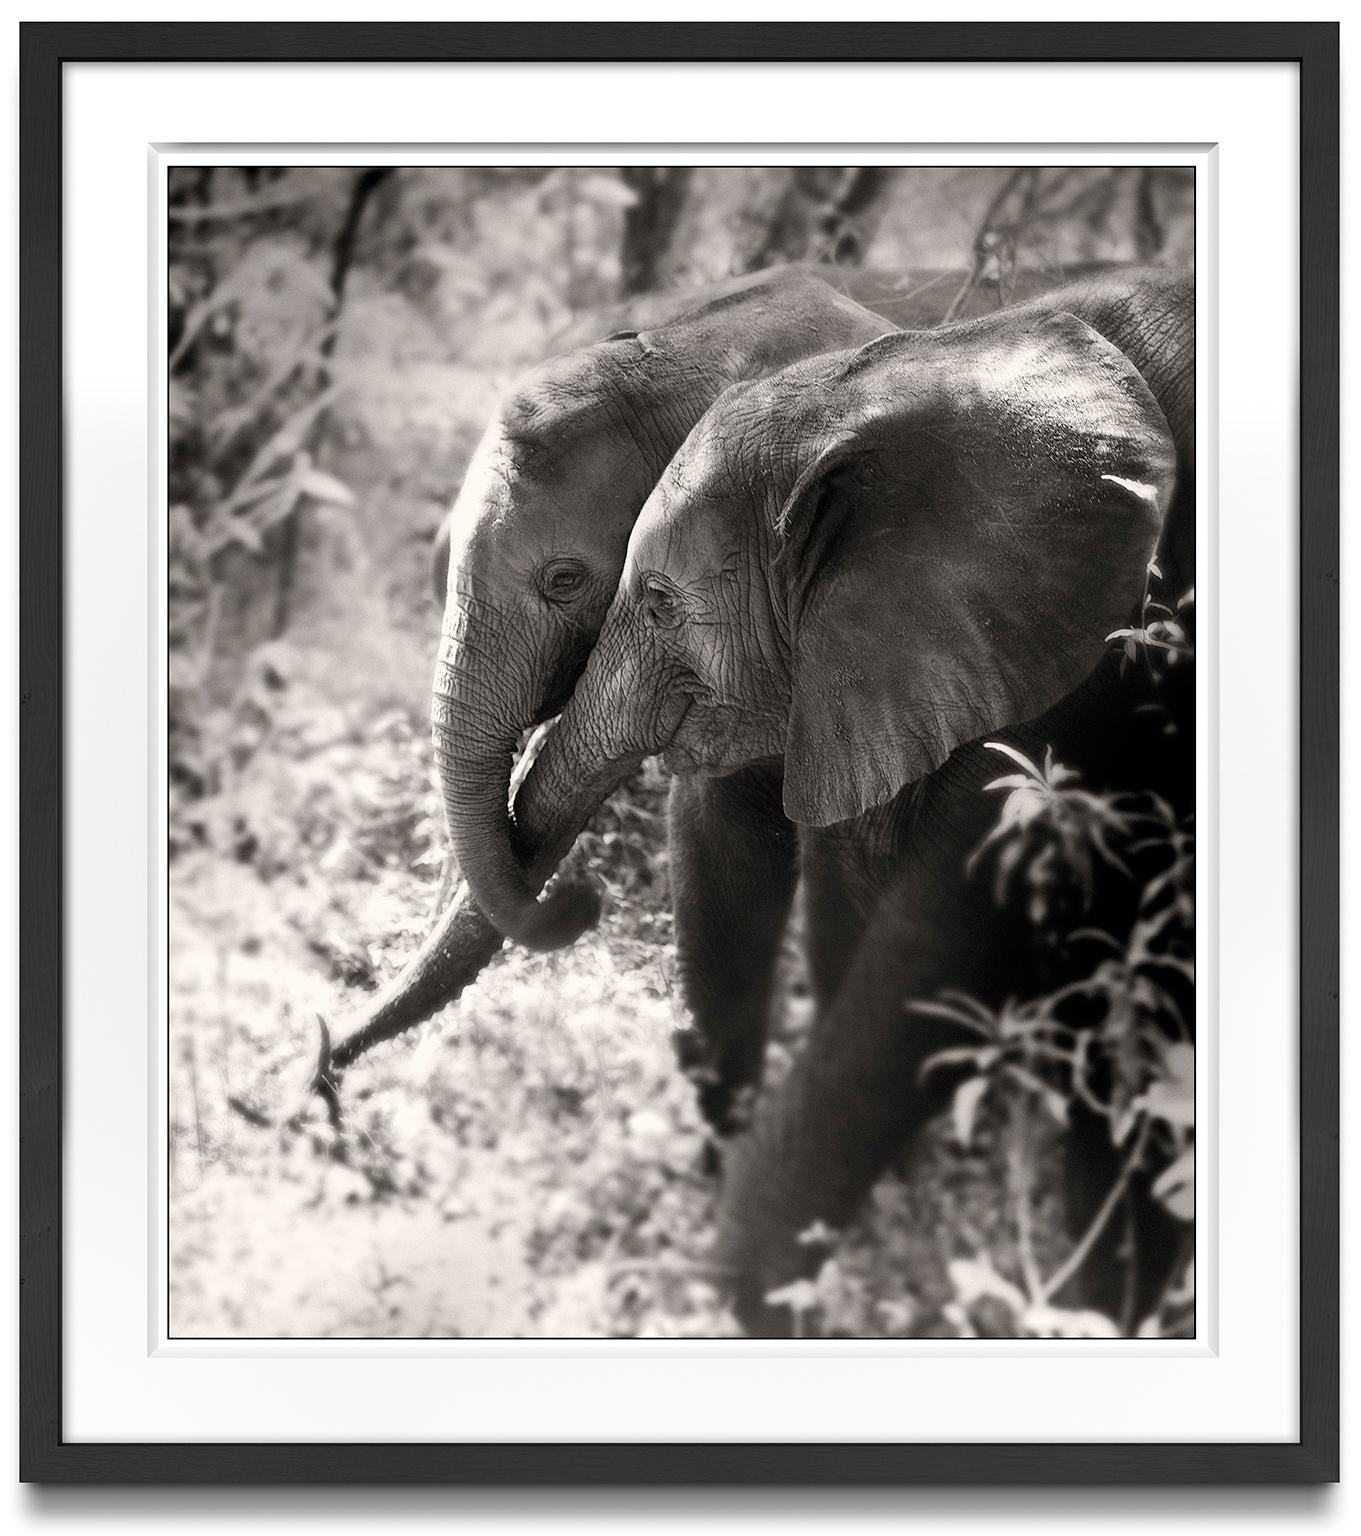 Soulmates II, Kenya, elephant, animal, wildlife, black and white photography - Photograph by Joachim Schmeisser